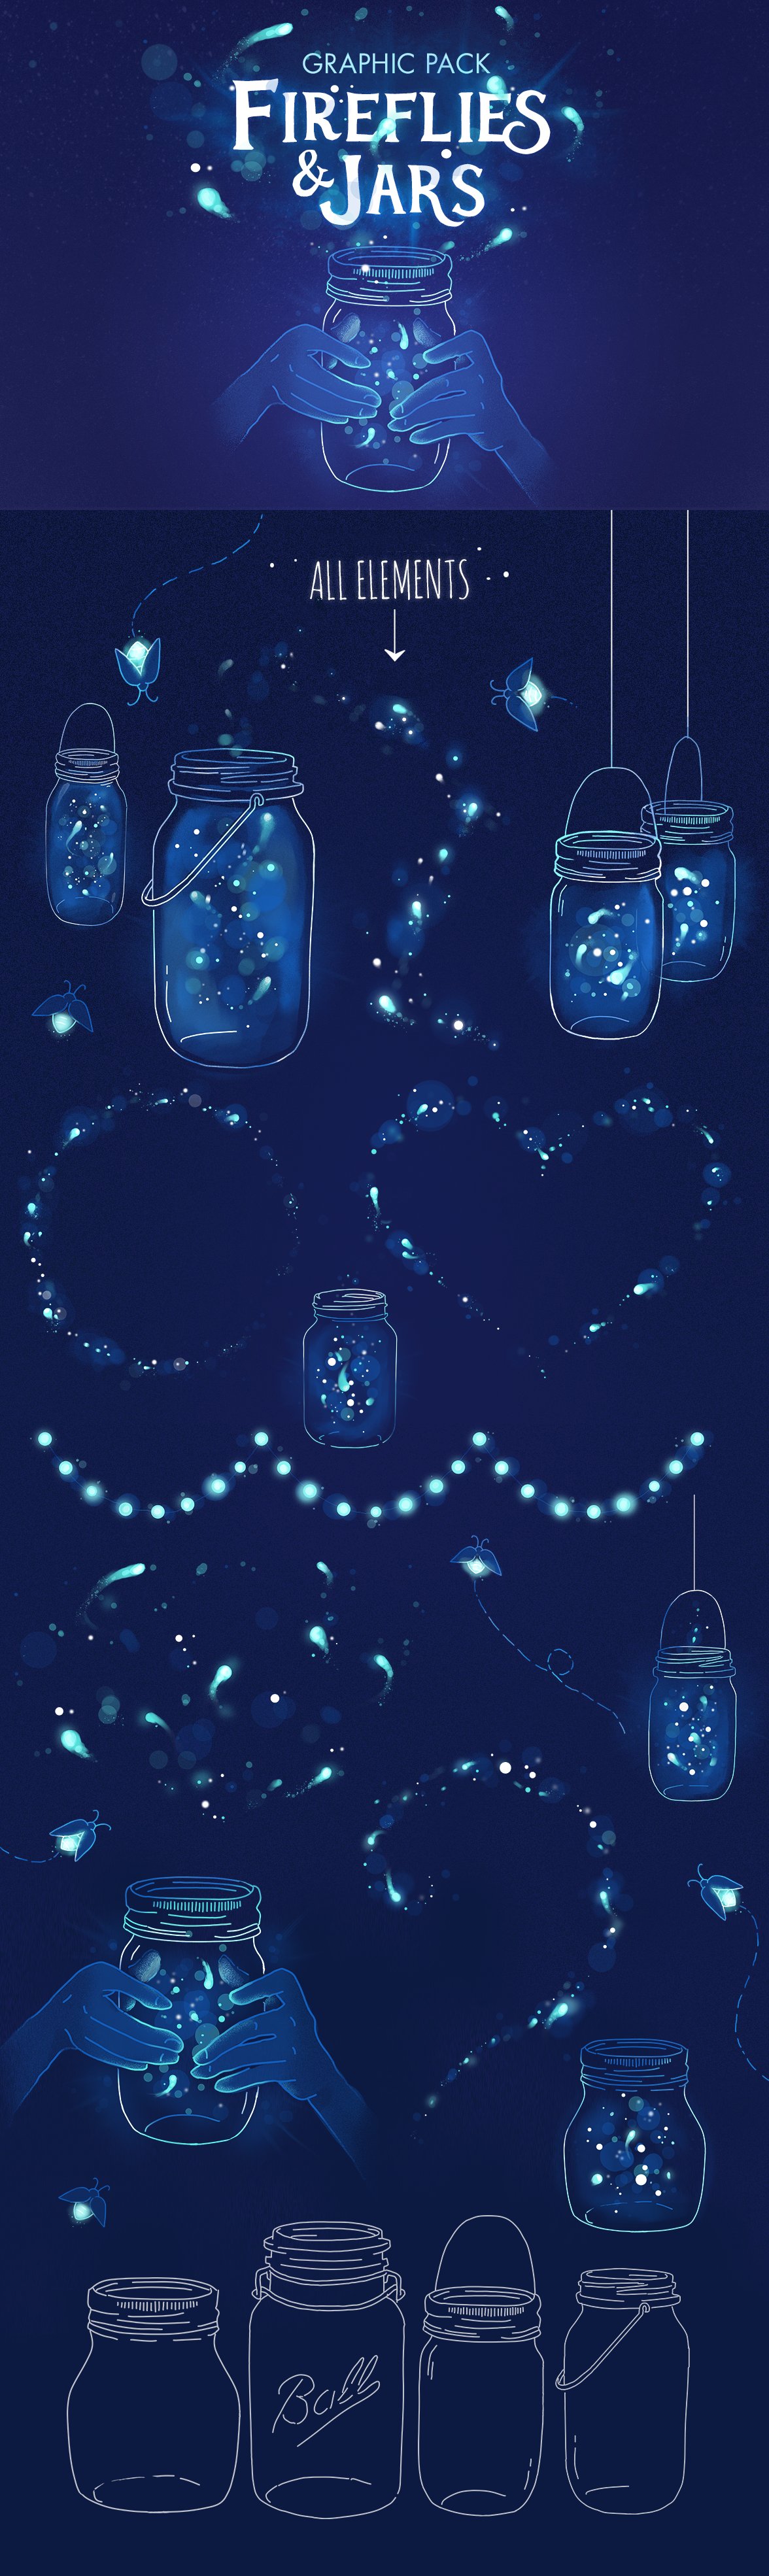 Fireflies & Jars cover image.